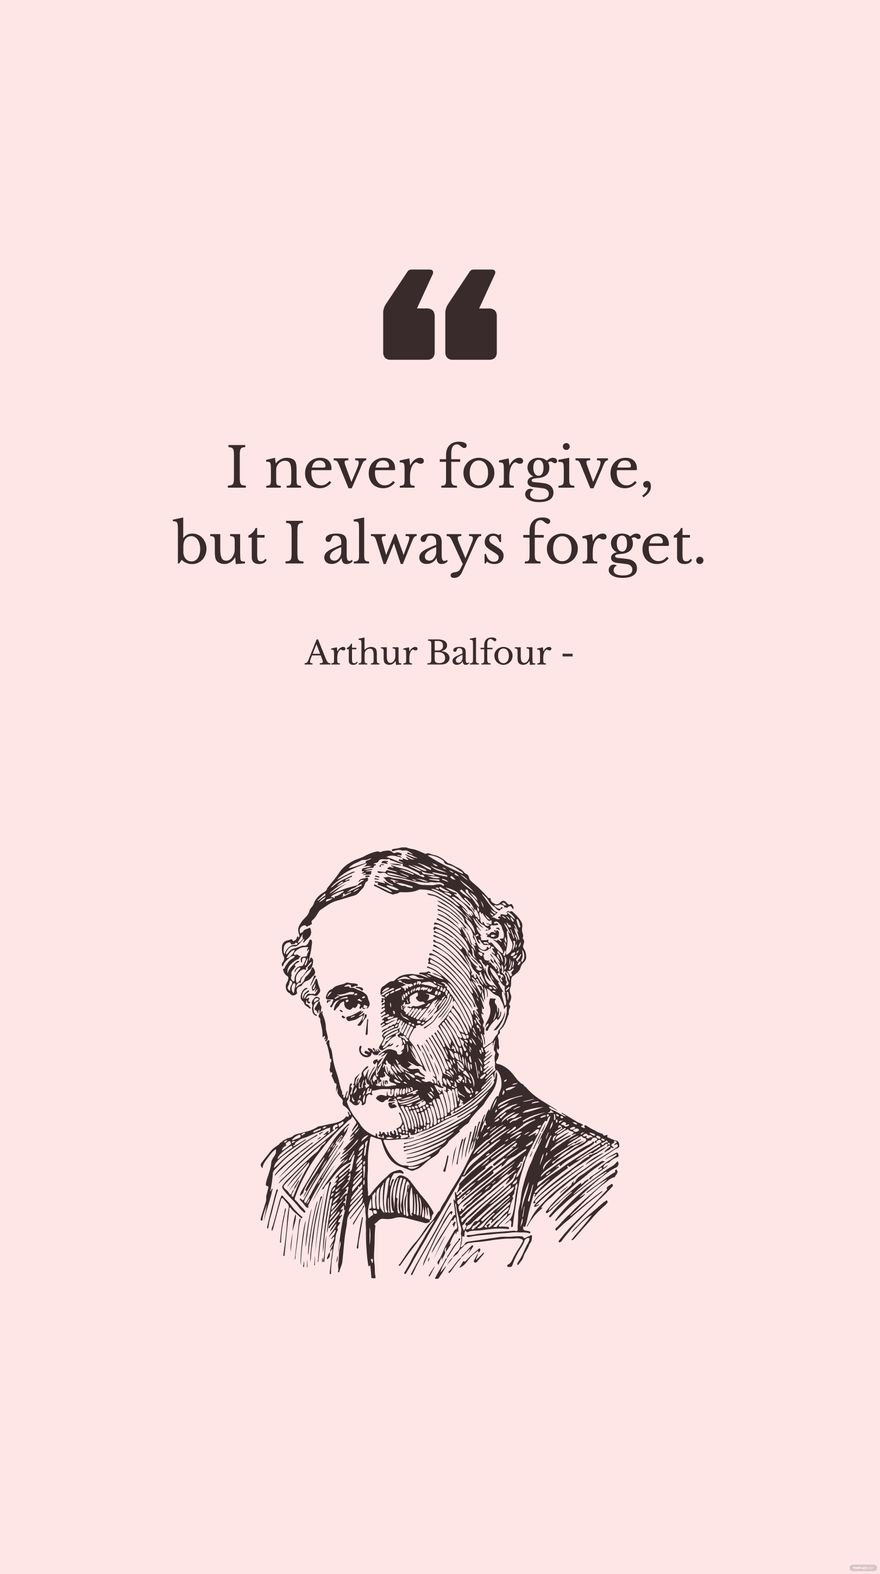 Arthur Balfour - I never forgive, but I always forget.